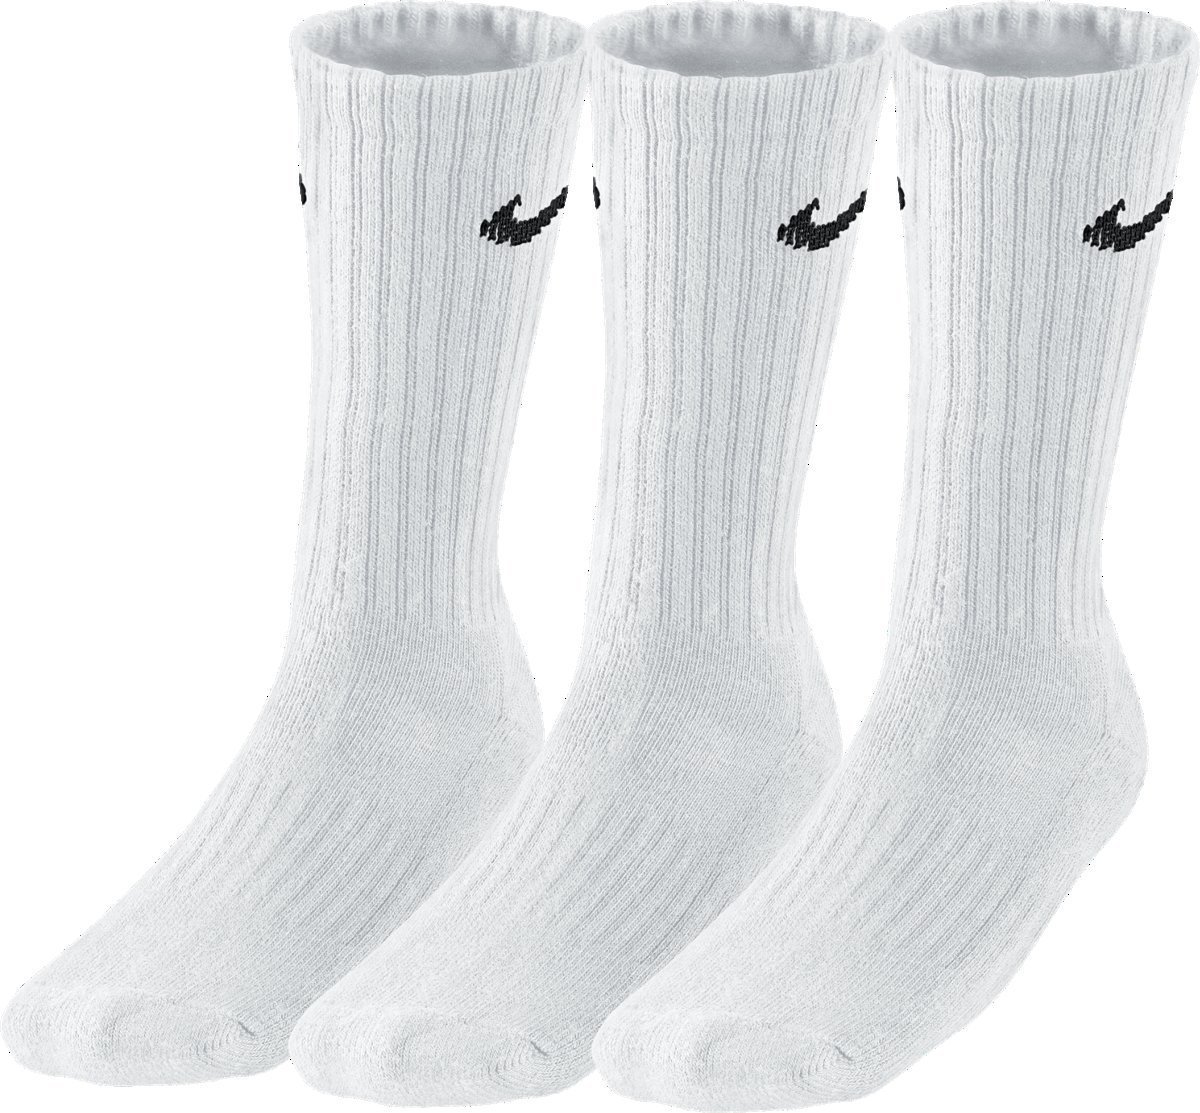 Socken Nike 3PPK VALUE COTTON CREW-SMLX